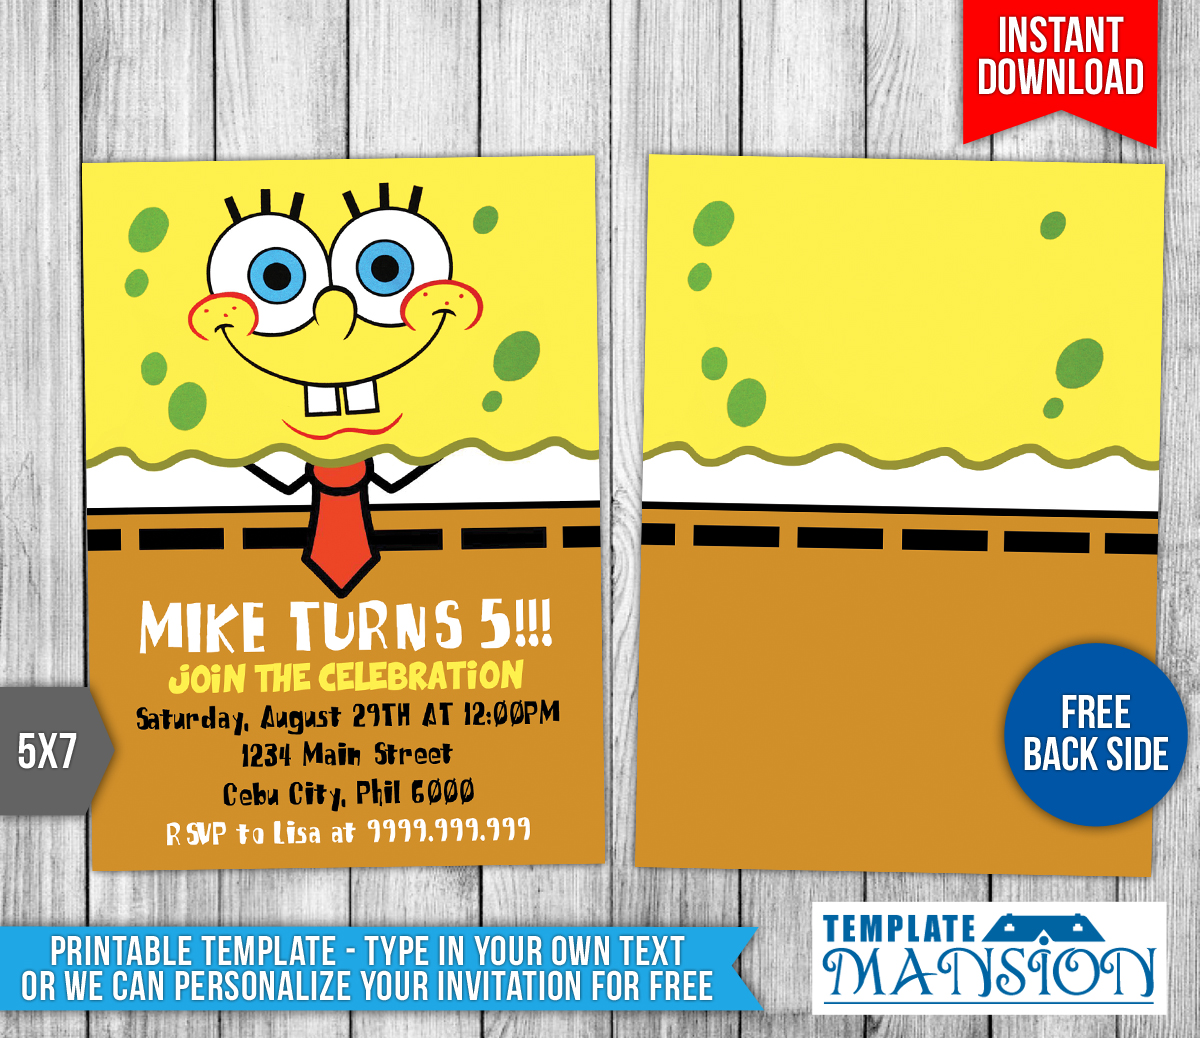 Spongebob Squarepants Birthday Invitation 1 by templatemansion on